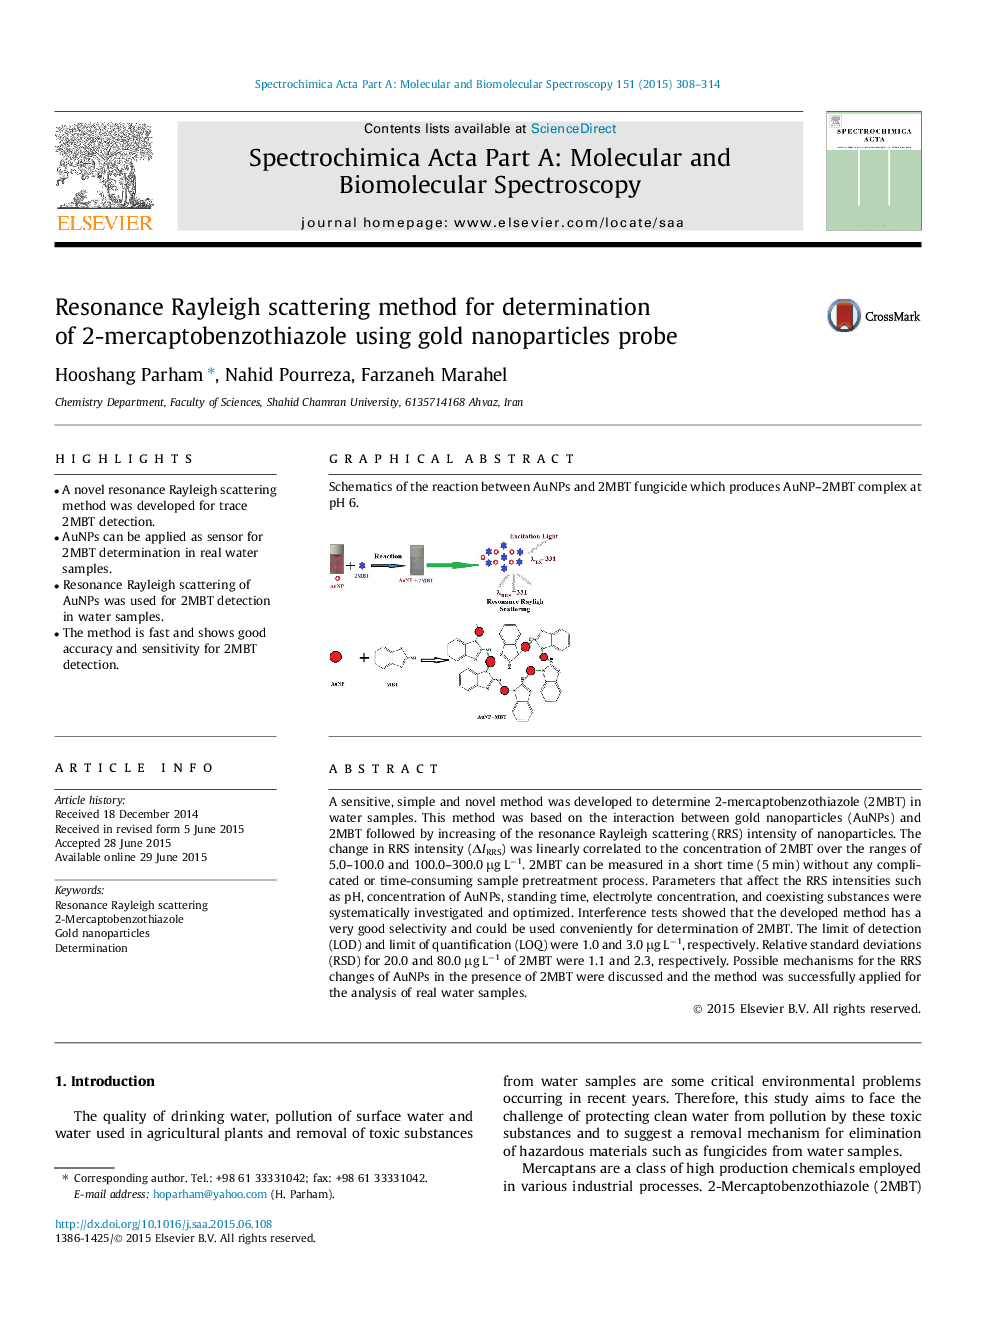 Resonance Rayleigh scattering method for determination of 2-mercaptobenzothiazole using gold nanoparticles probe